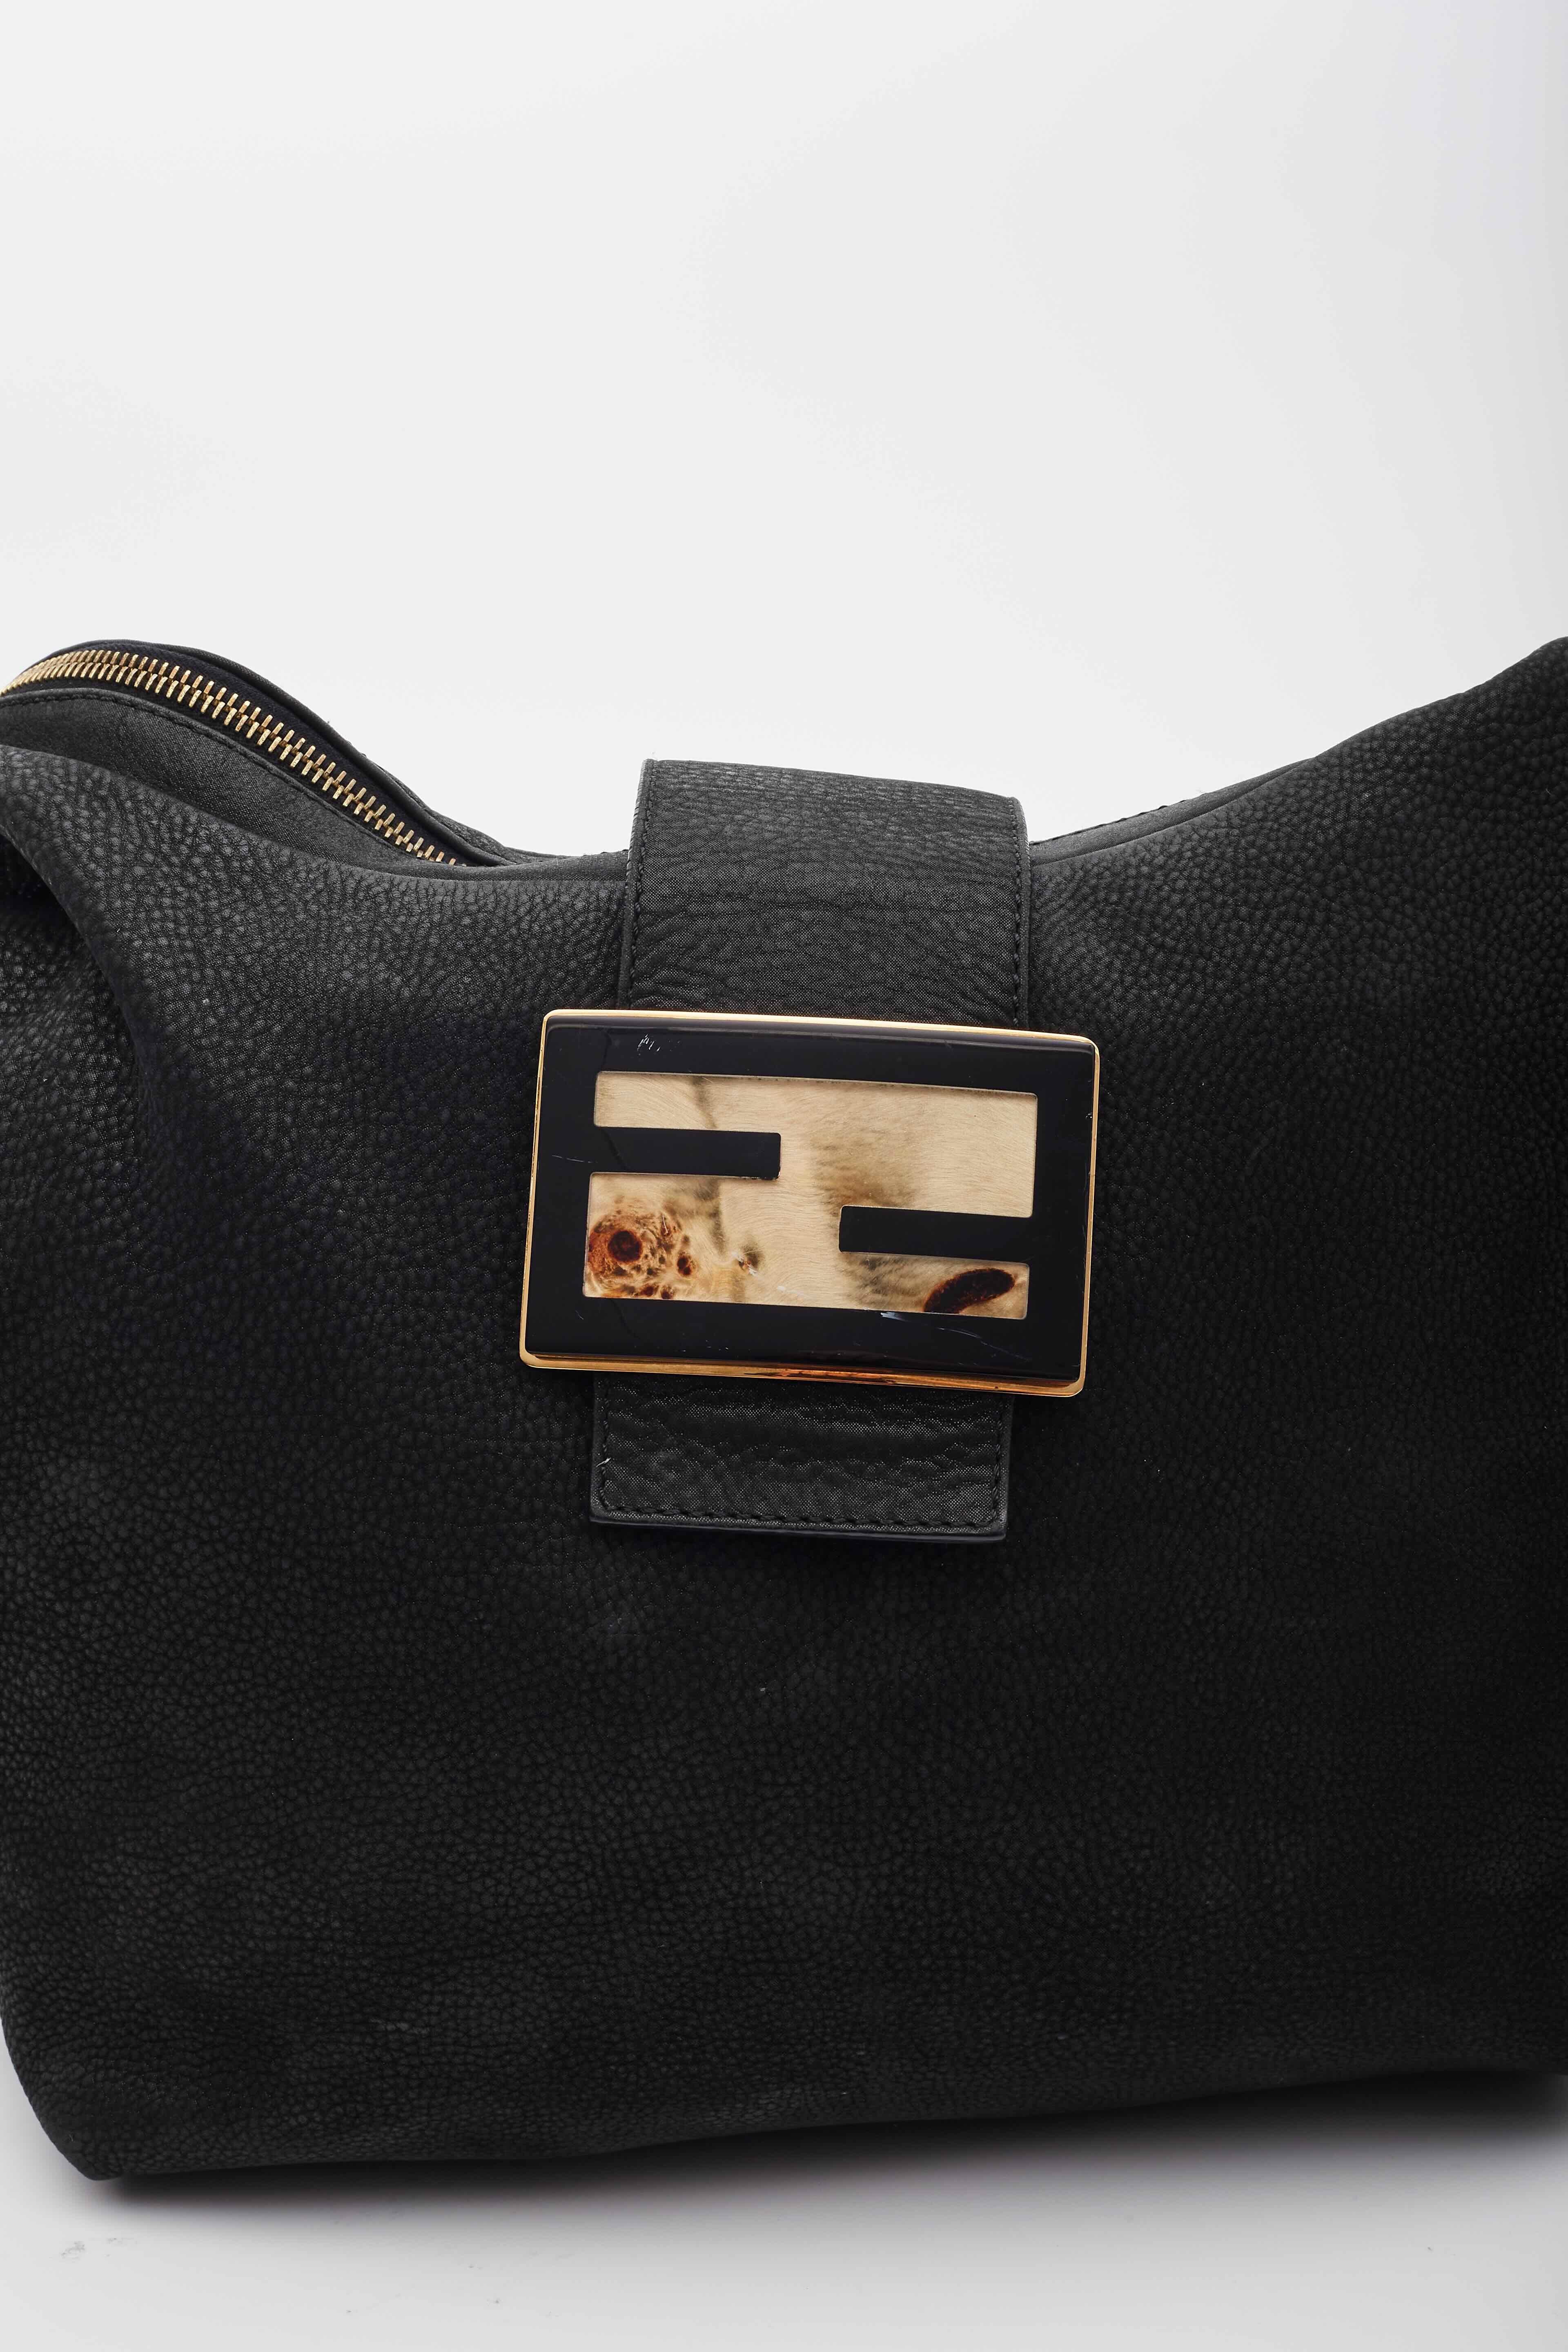 Fendi Black Leather Forever Mama Shoulder Bag Large In Good Condition For Sale In Montreal, Quebec